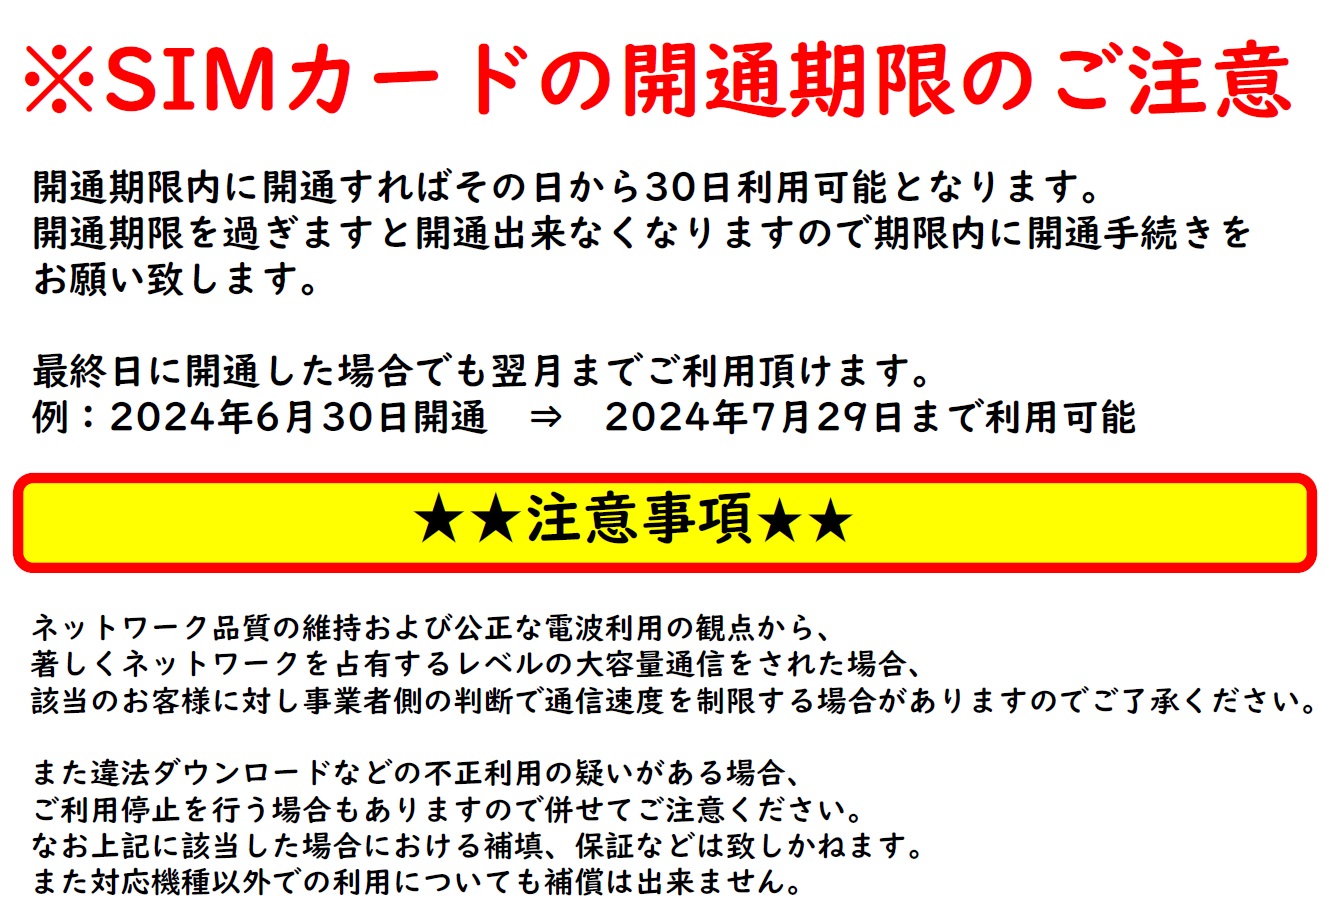 * Japan domestic for plipeidoSIM /docomo circuit data SIM card / 4G*LTE connection use period 30 day / Japan SIM / Japan plipeidoSIM